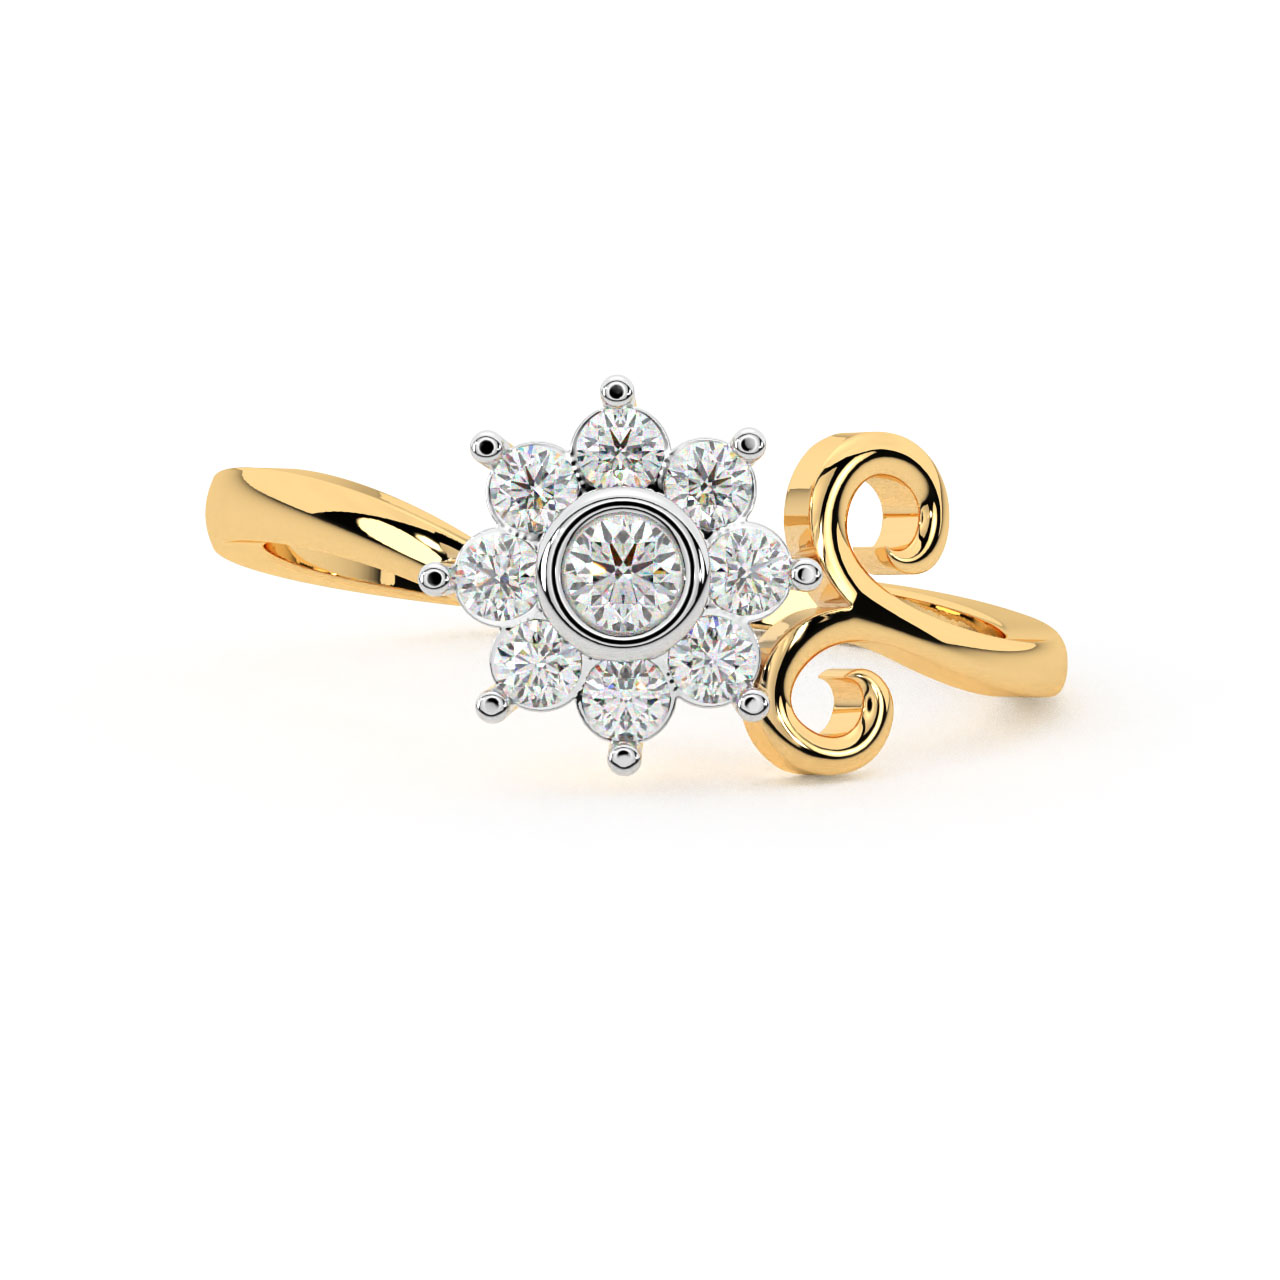 Mikia Round Diamond Engagement Ring